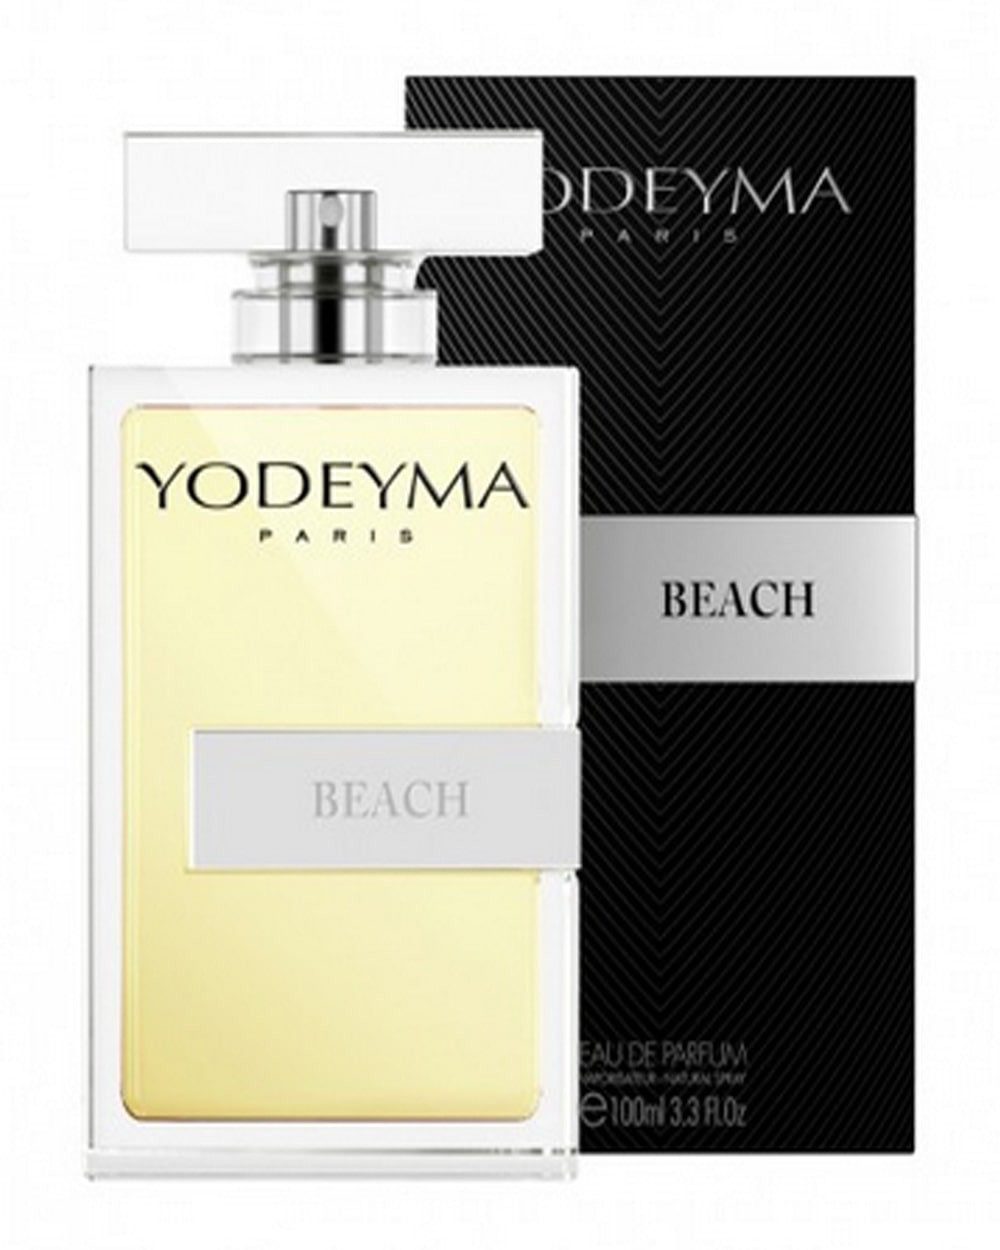 Eau de Parfum YODEYMA Parfum Beach - Eau de Parfum für Herren 100 ml